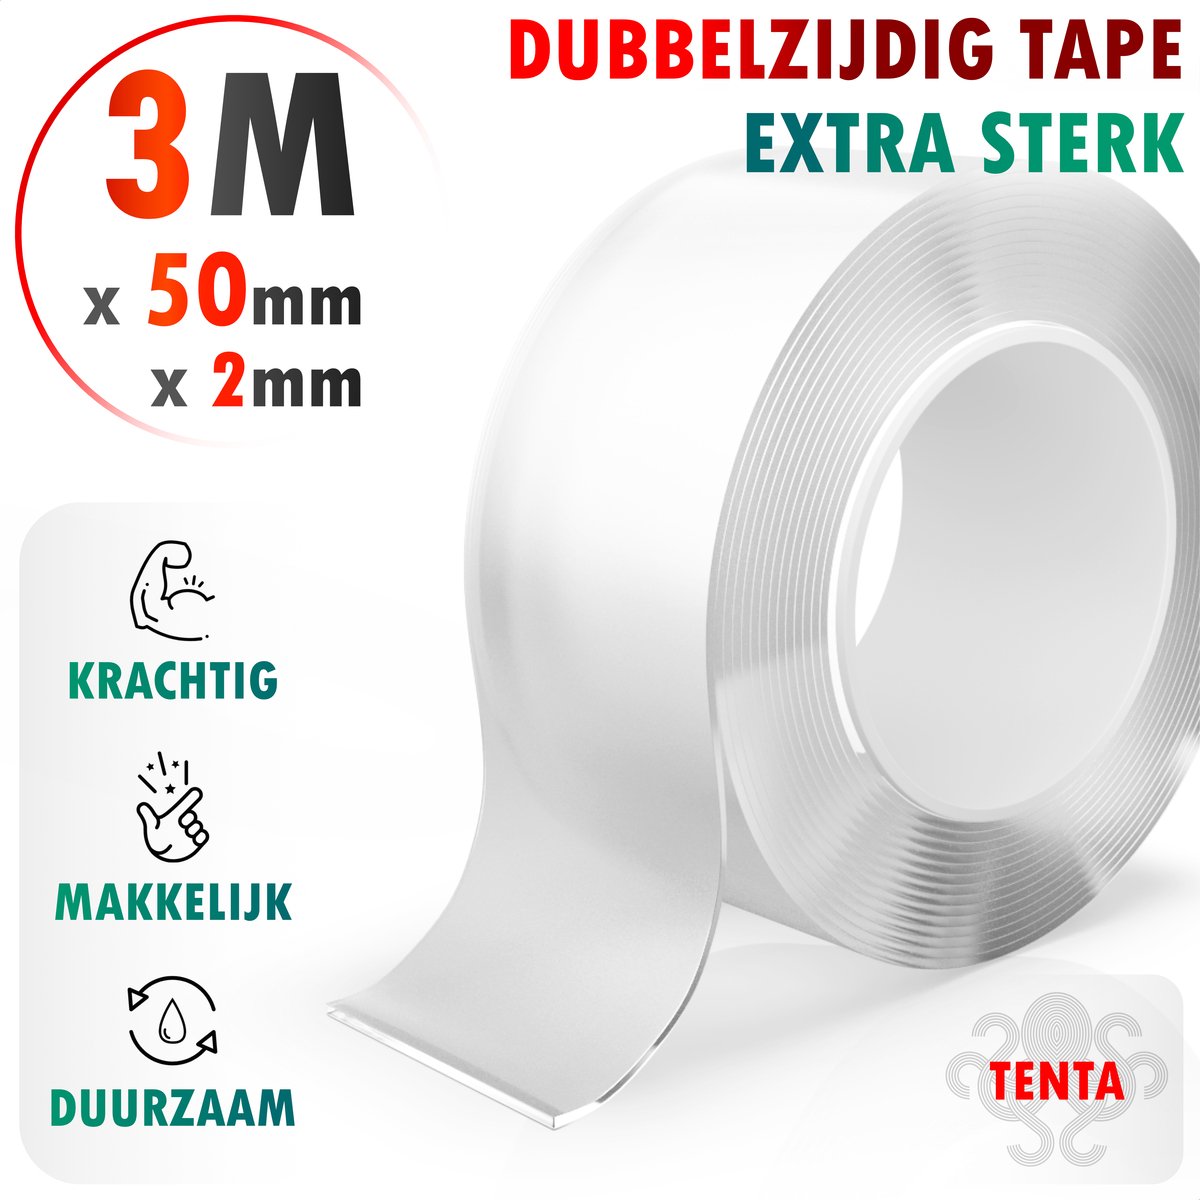 TENTA® Dubbelzijdig Tape Extra Sterk - 3m x 50mm x 2mm - TENTA®